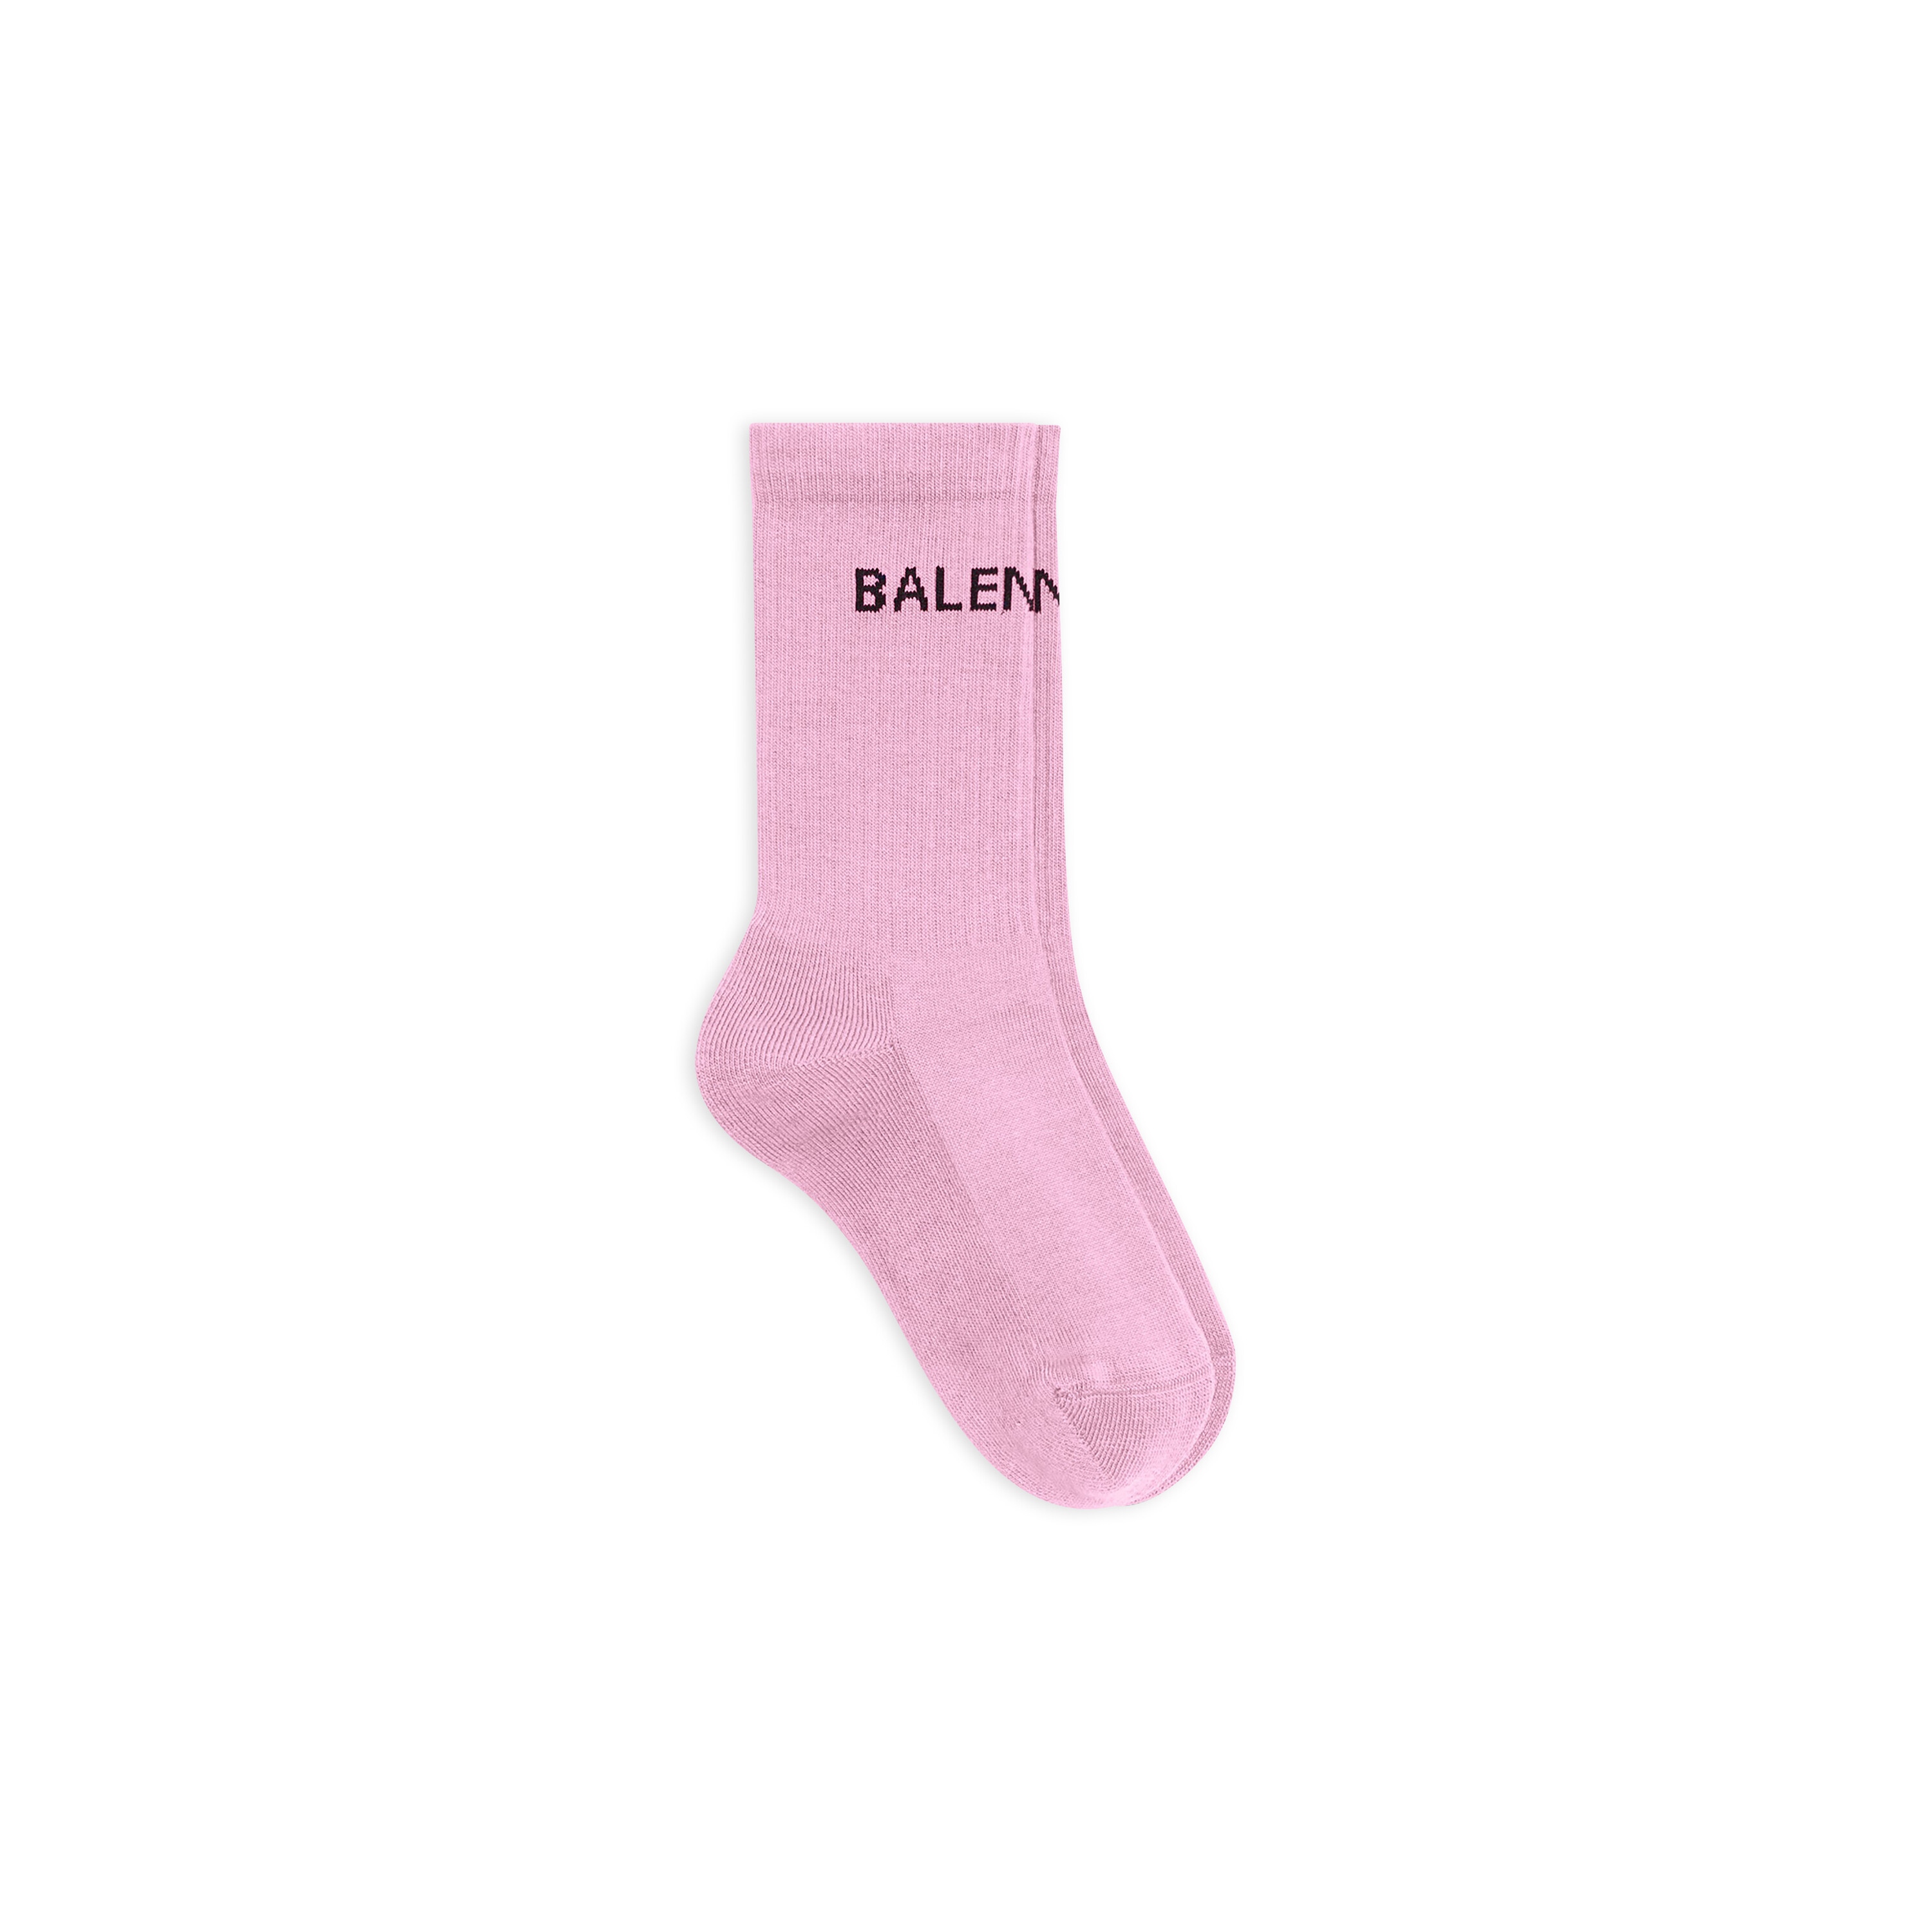 Balenciaga All Over Logo Socks in Pink  White  Pink balenciaga Balenciaga  Pink